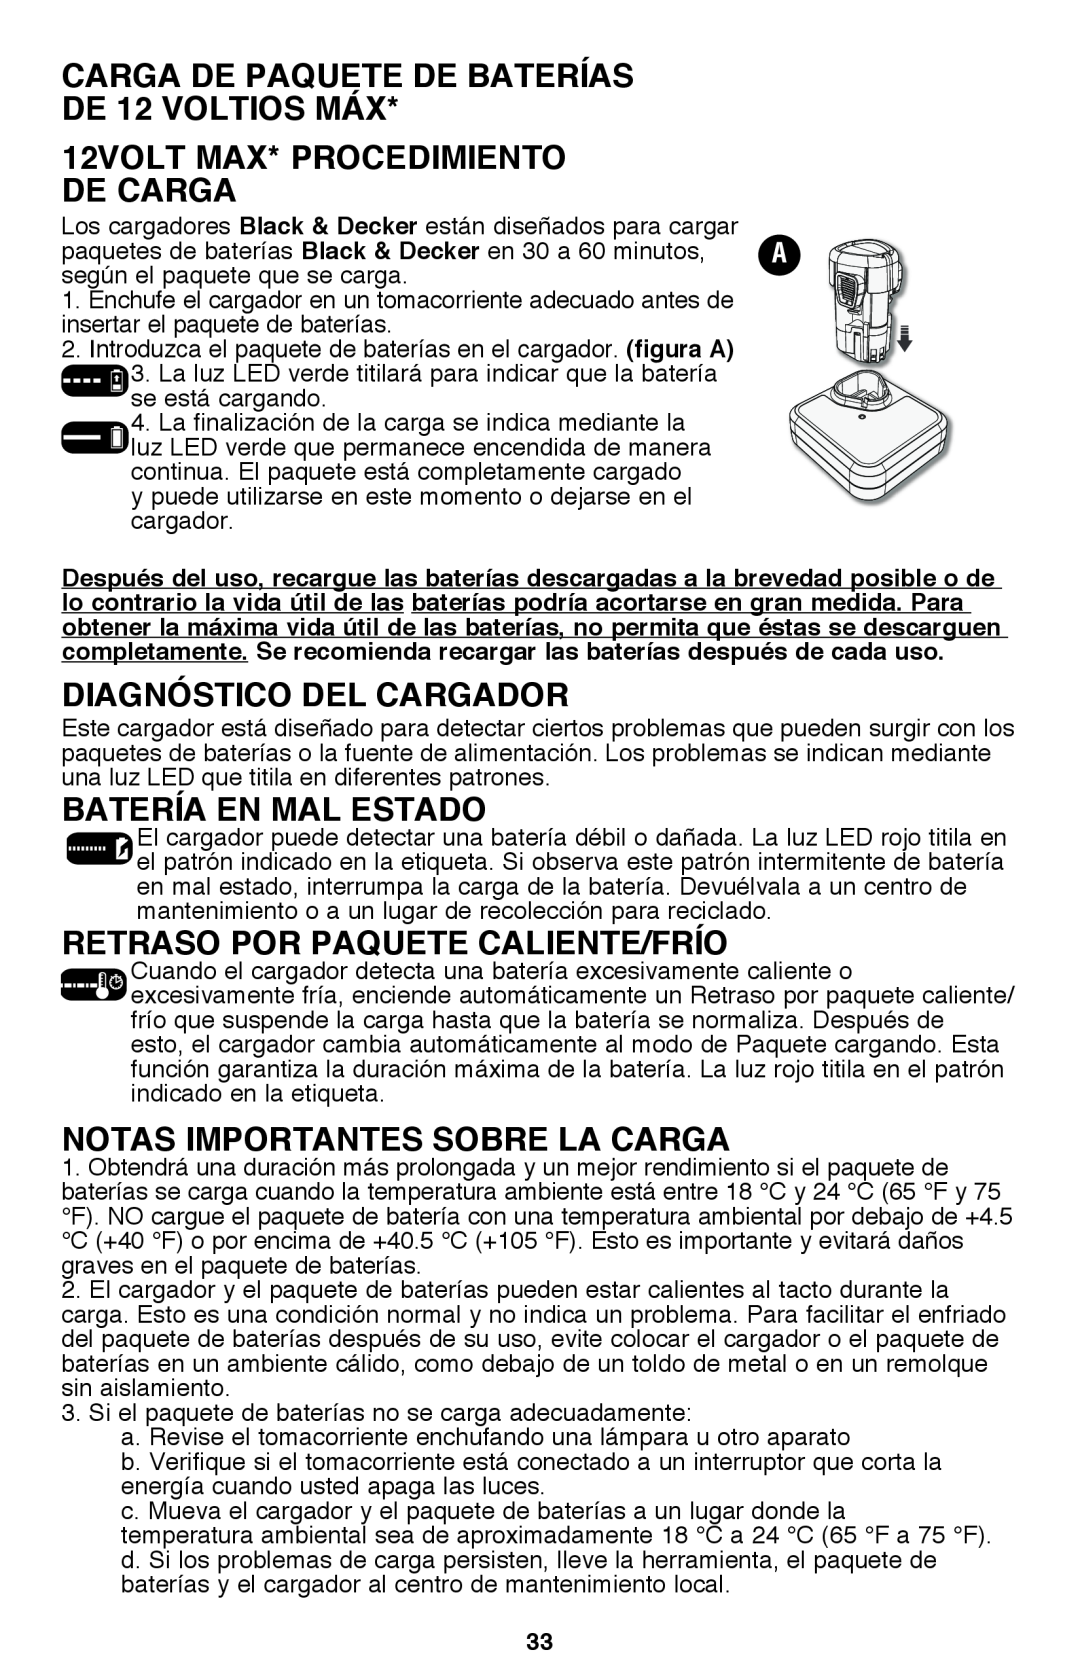 Black & Decker BDCF12, BDCF20 manual CARGA DE PAQUETE DE BATERÍAS DE 12 VOLTIOS MÁX, 12volt max* Procedimiento de carga 